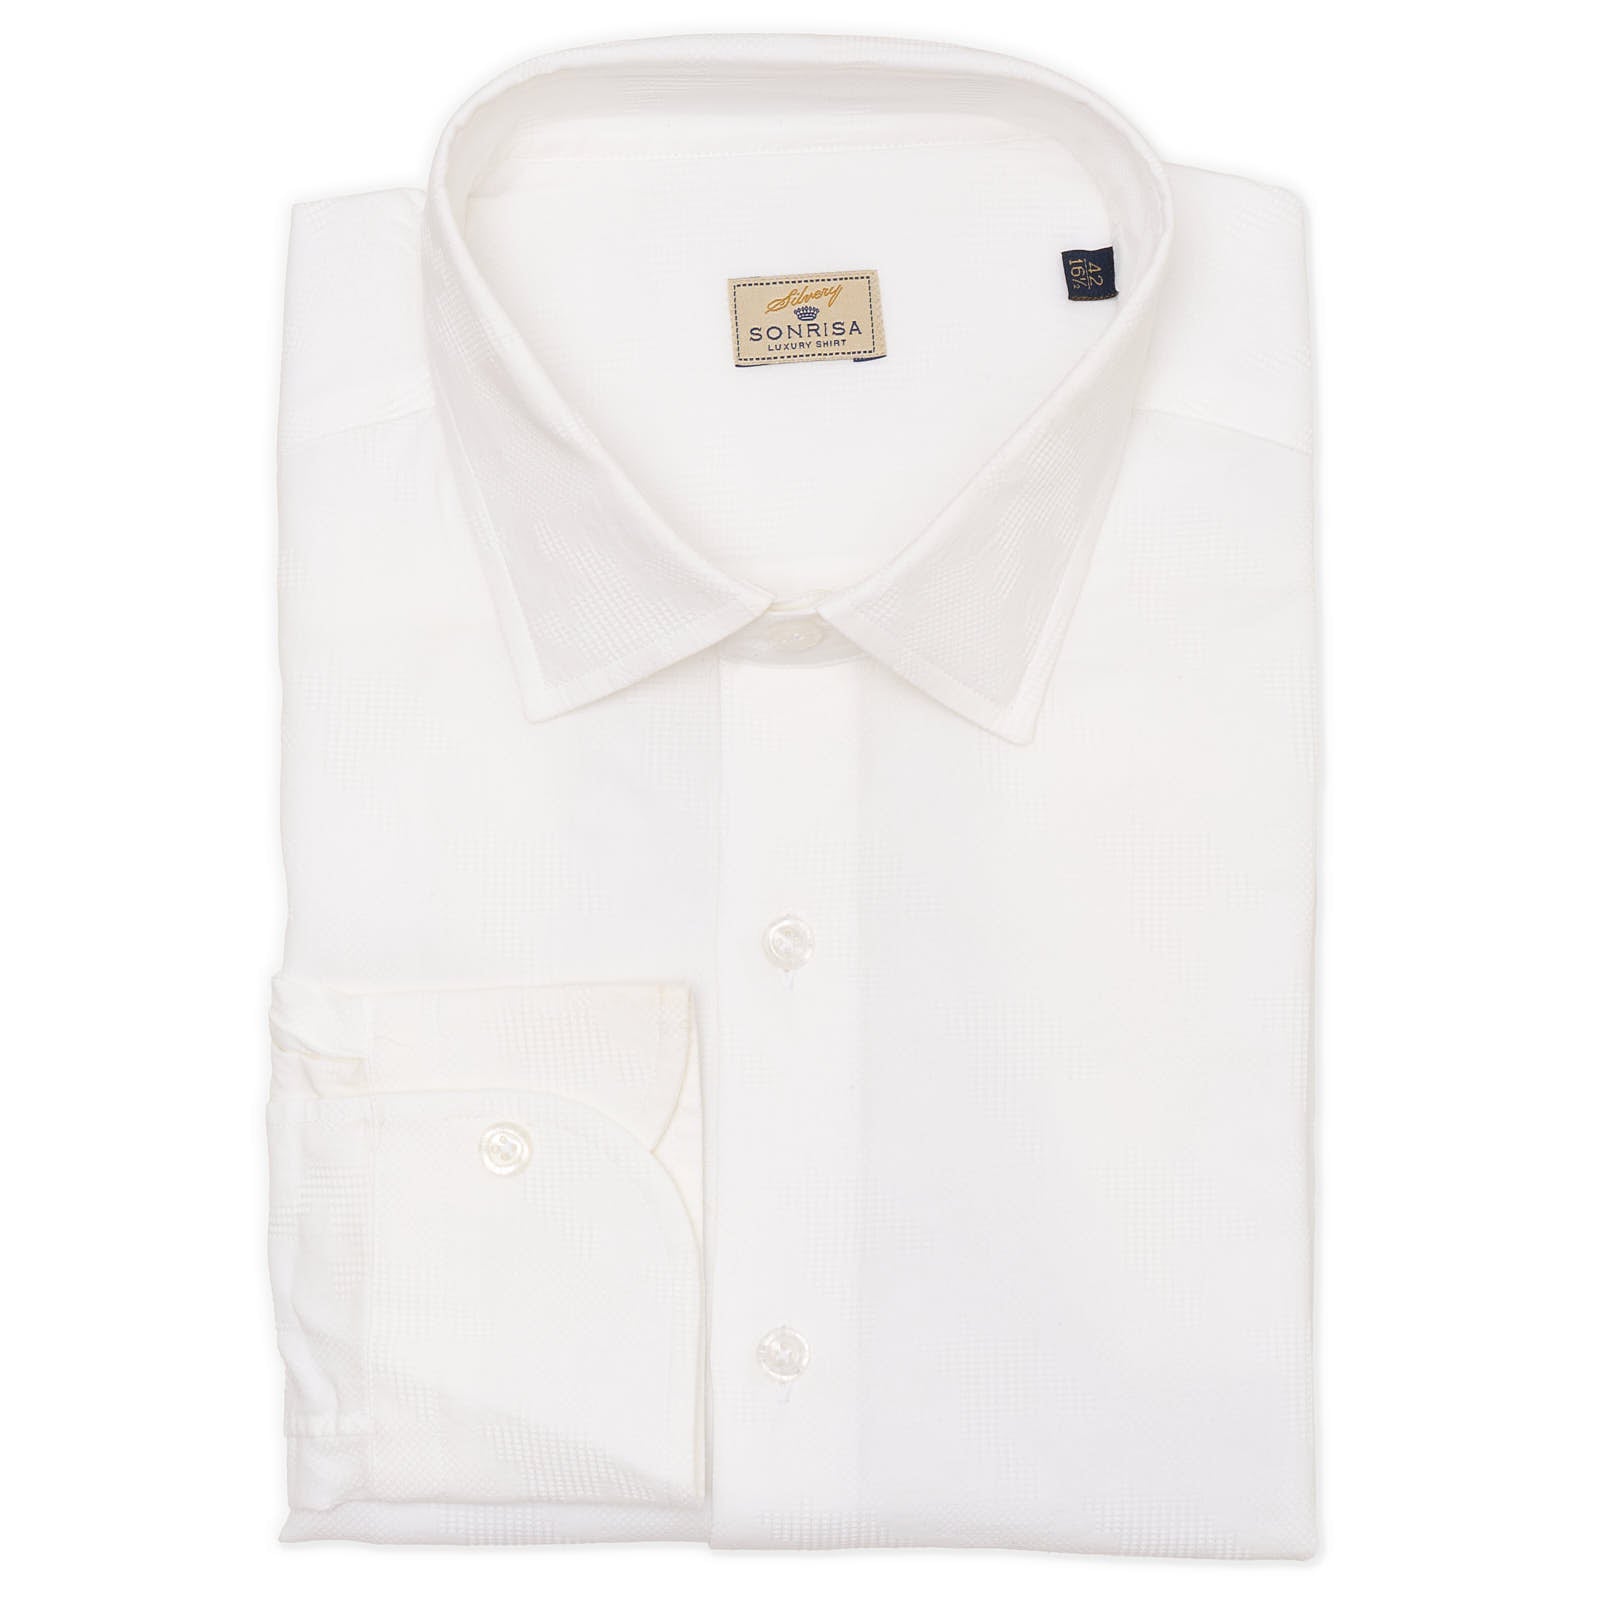 SONRISA Milano White Cotton Shirt EU 42 NEW US 16.5